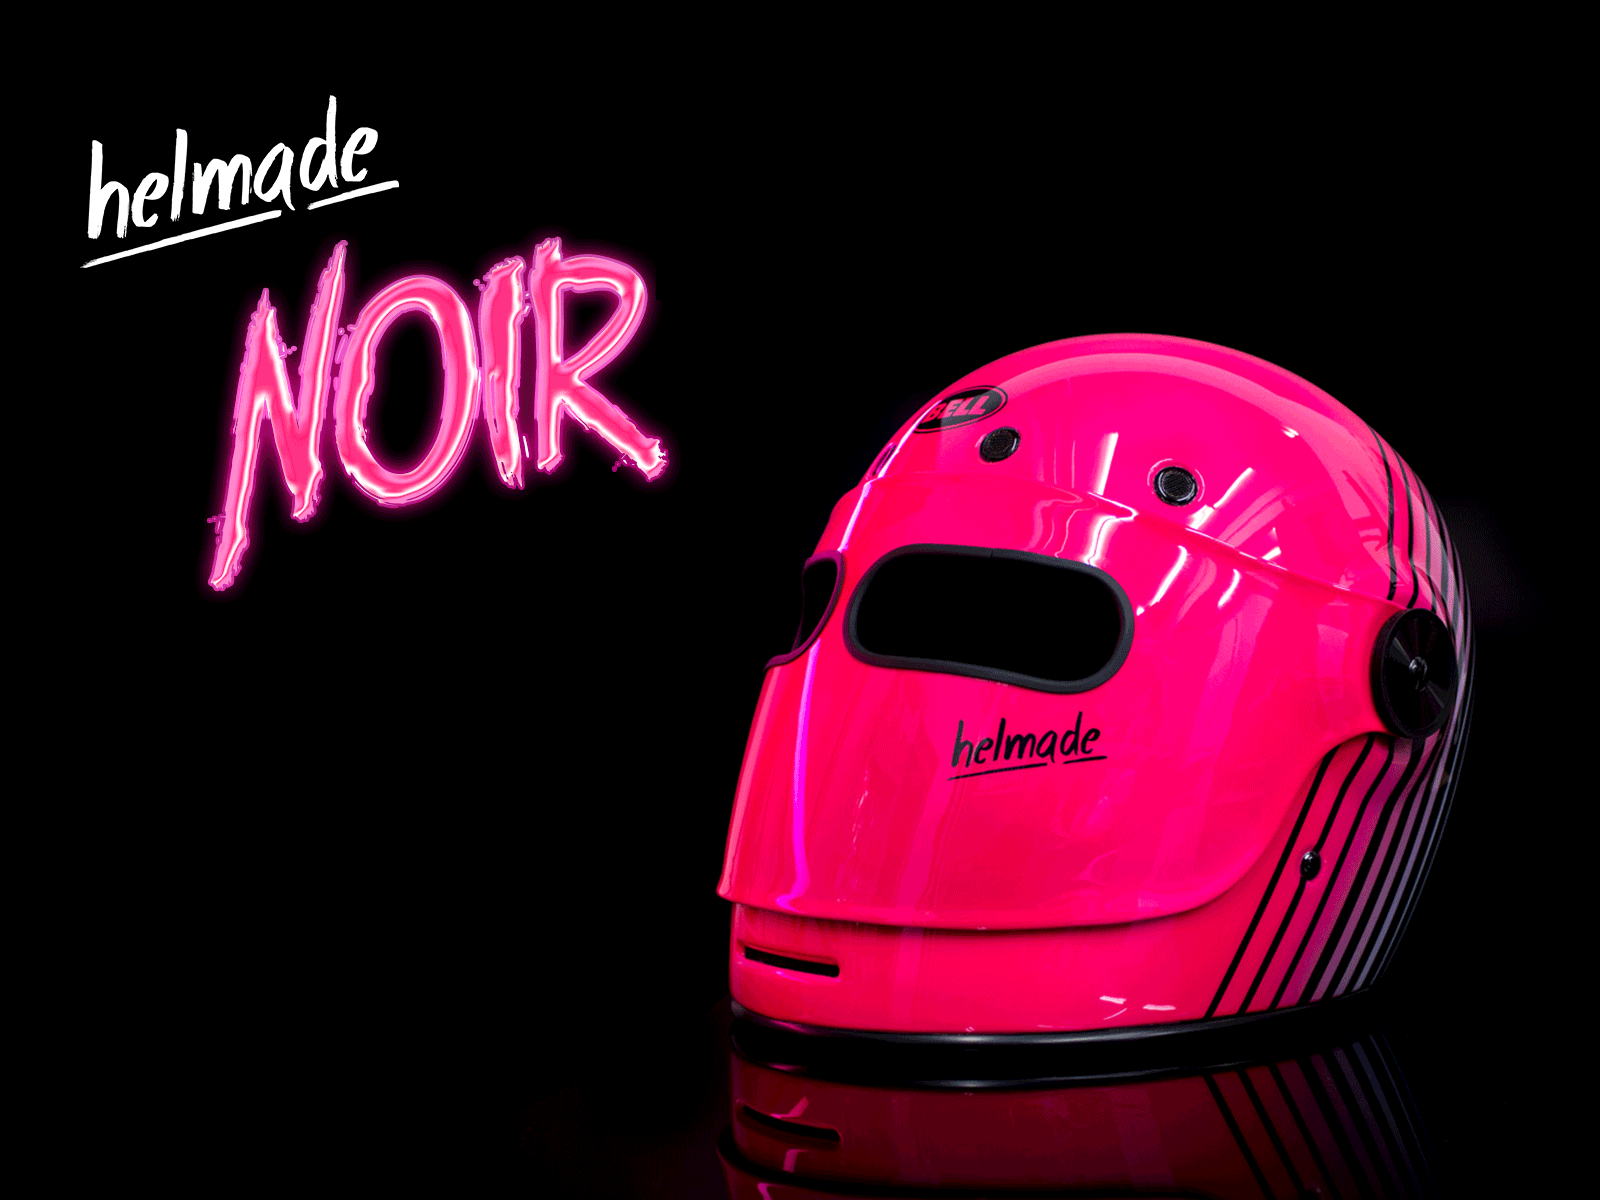 helmade Noir - helmet from a dystopic future art customization futuristic helmet design neon product design